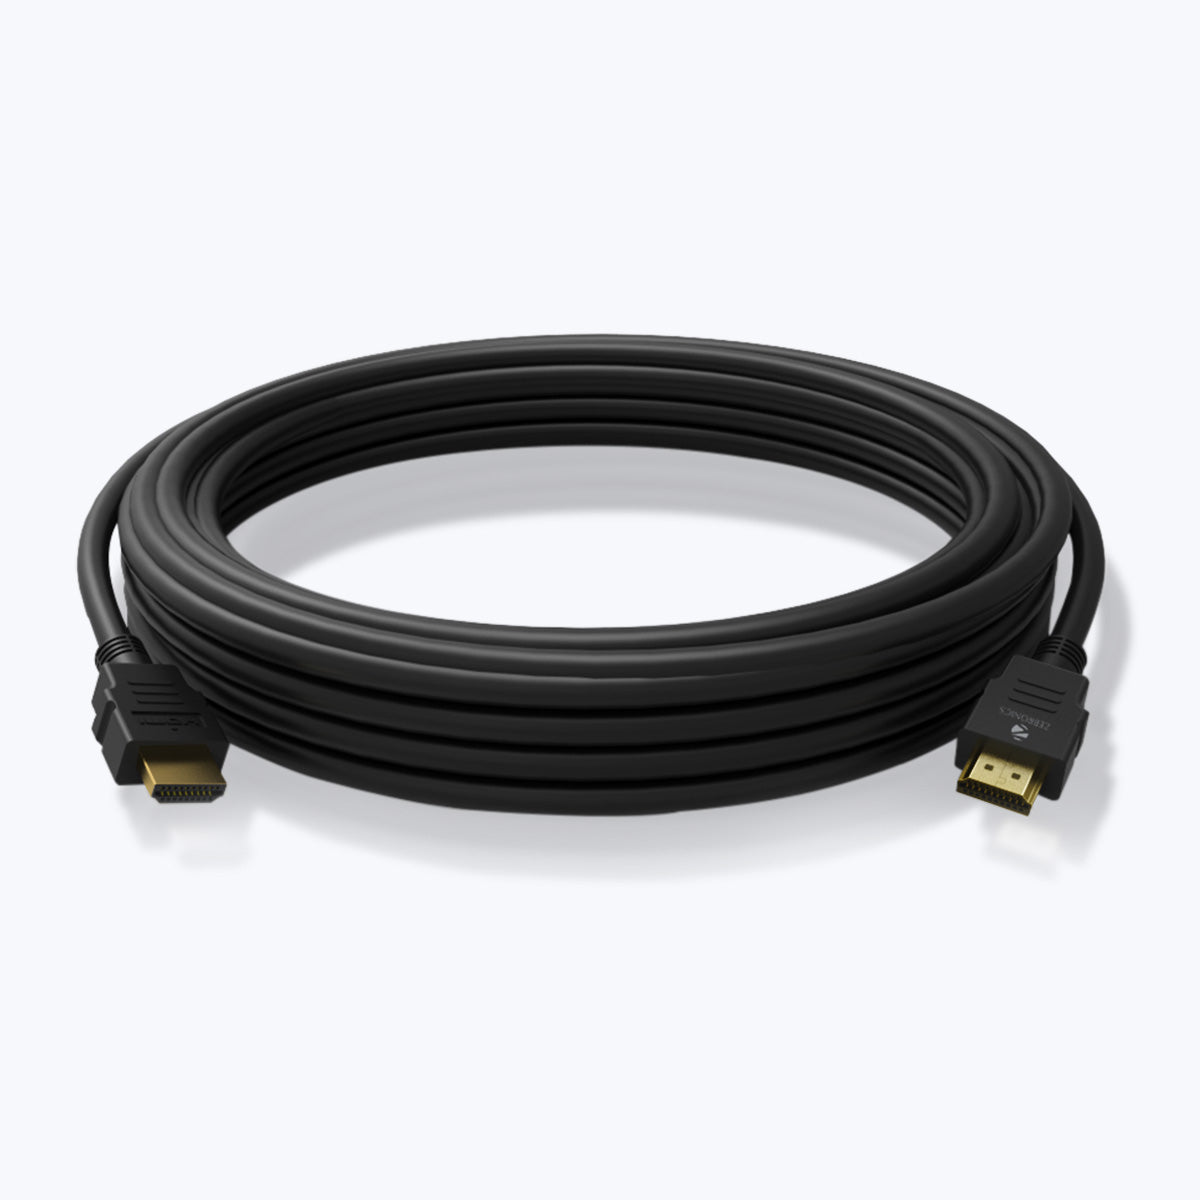 ZEB-HAA1520 (1.5 Meter) - HDMI Cable - Zebronics